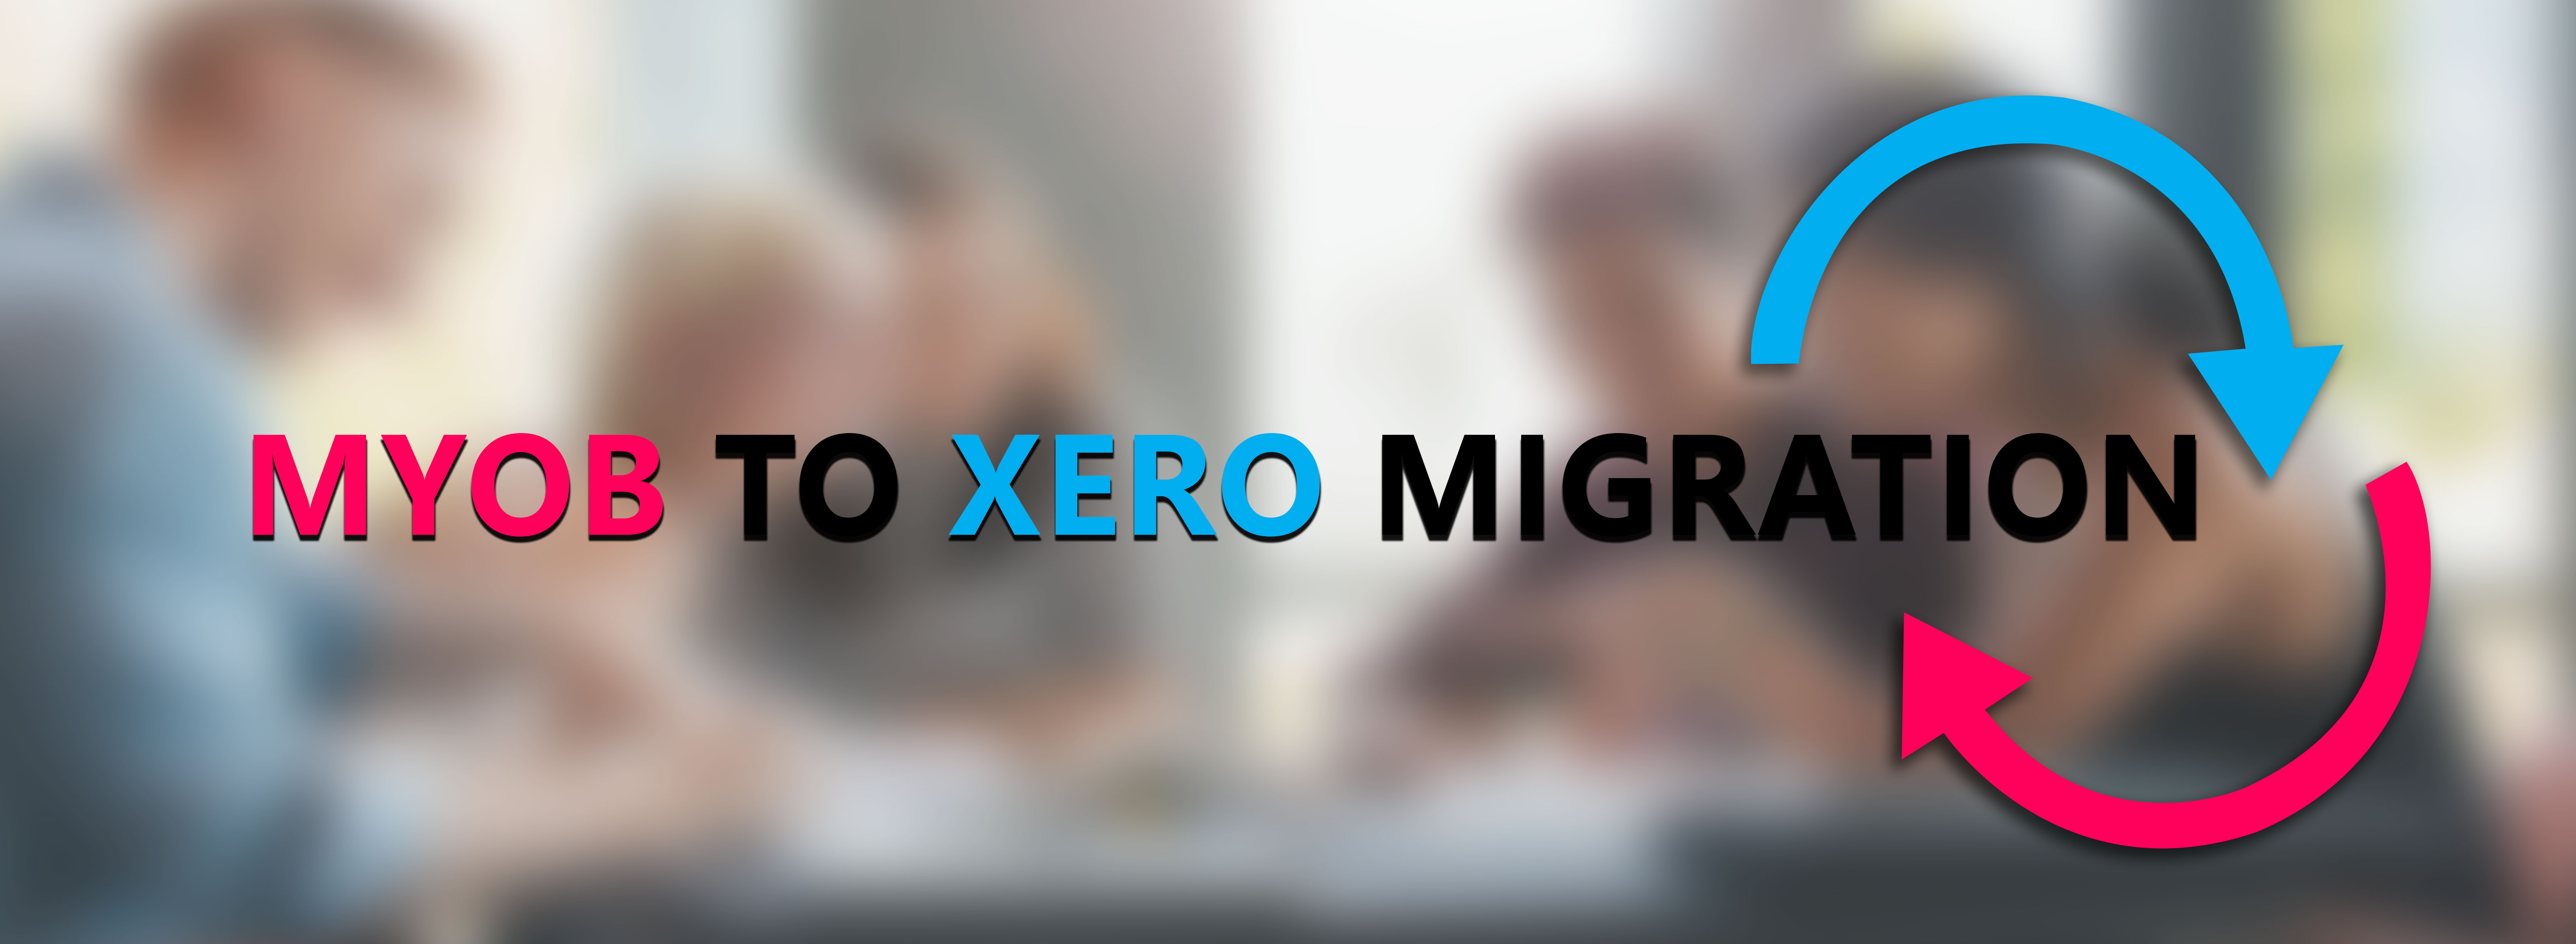 migration myob to xero